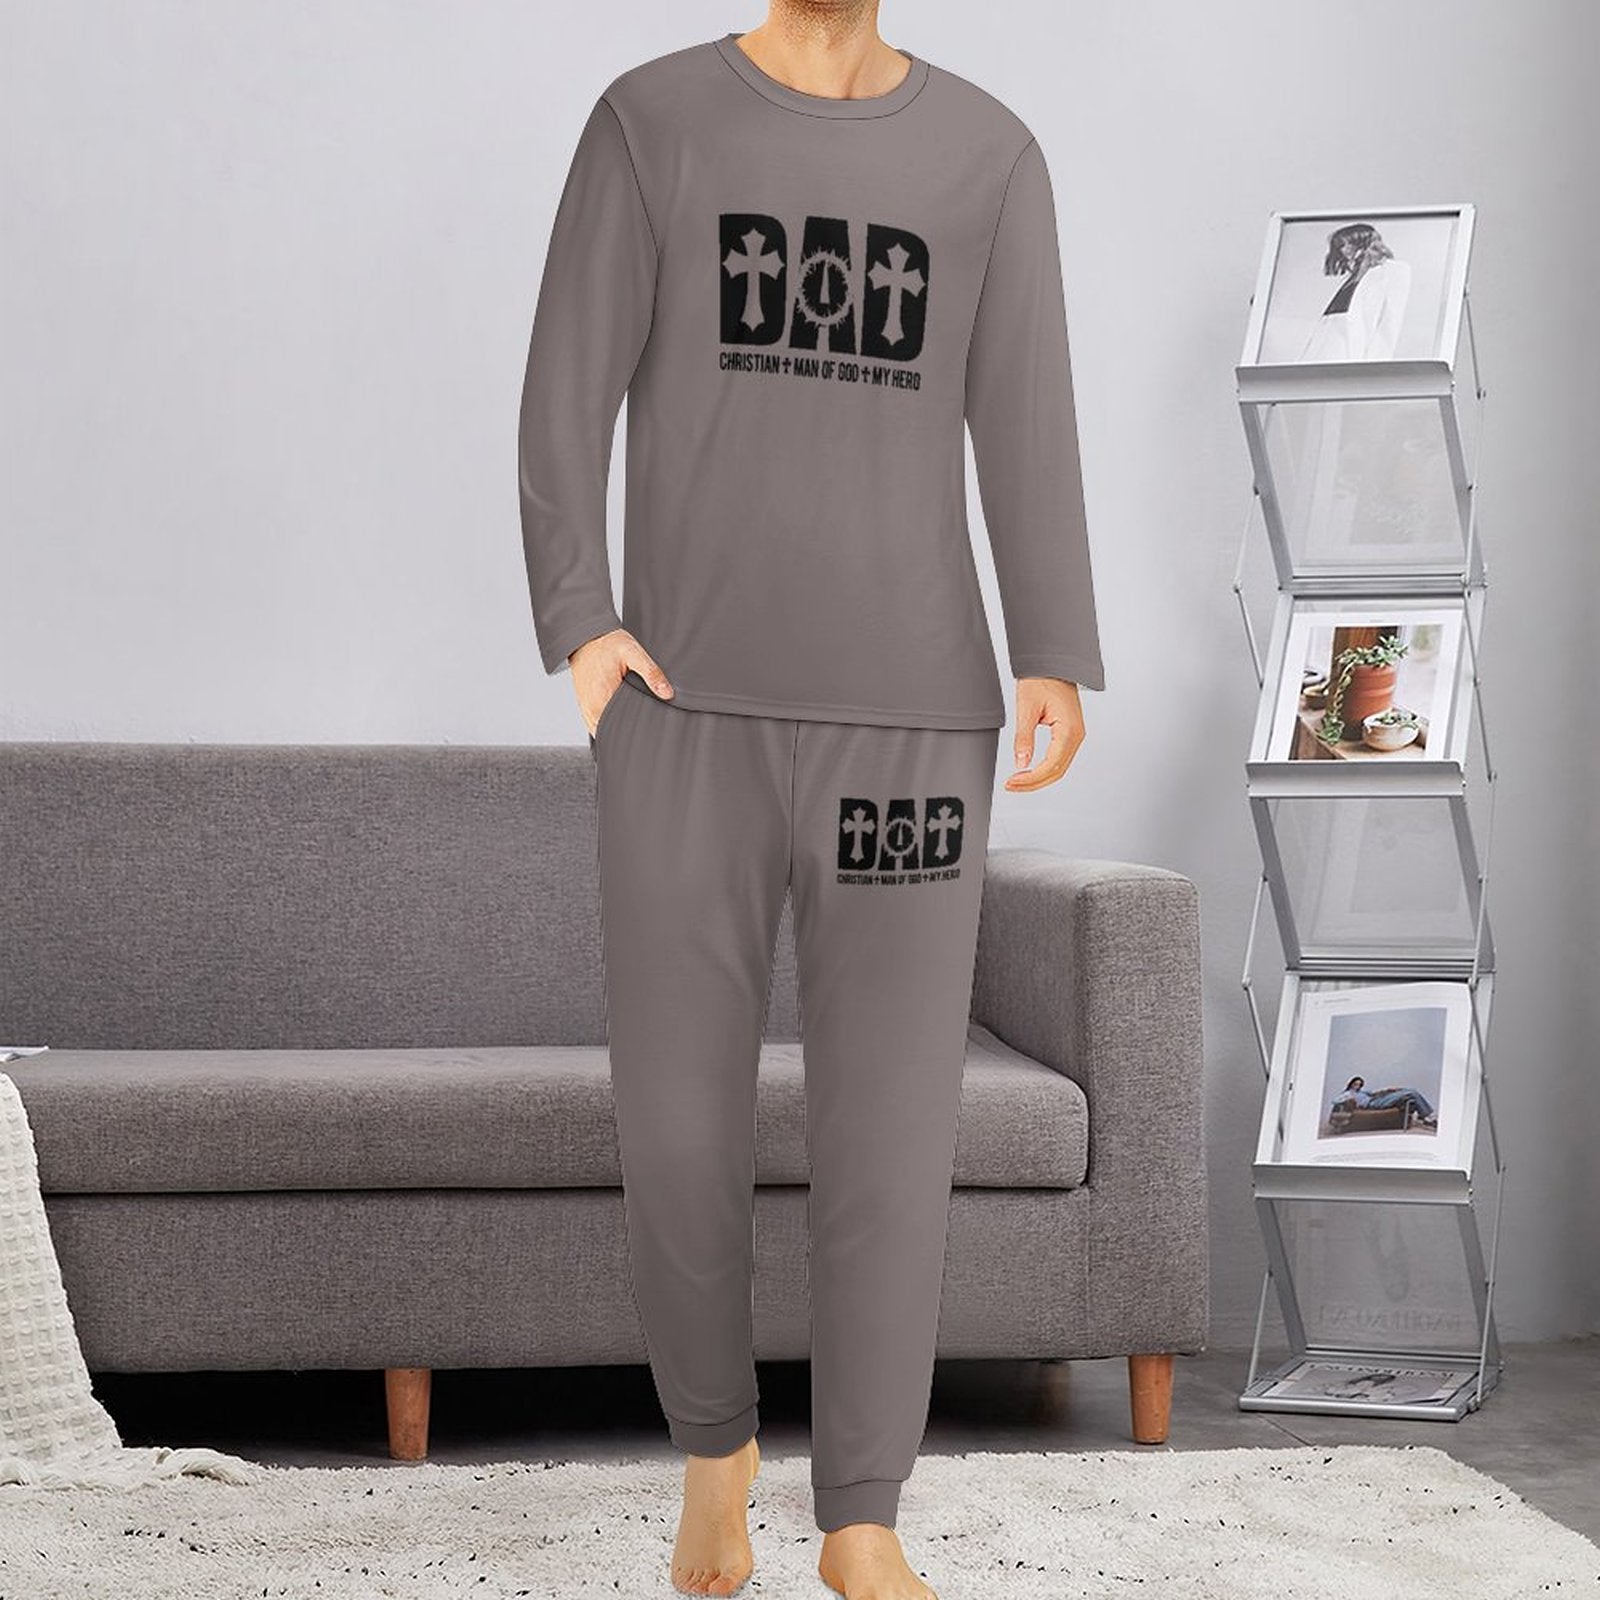 Dad Christian Man Of God Hero Men's Christian Pajamas SALE-Personal Design